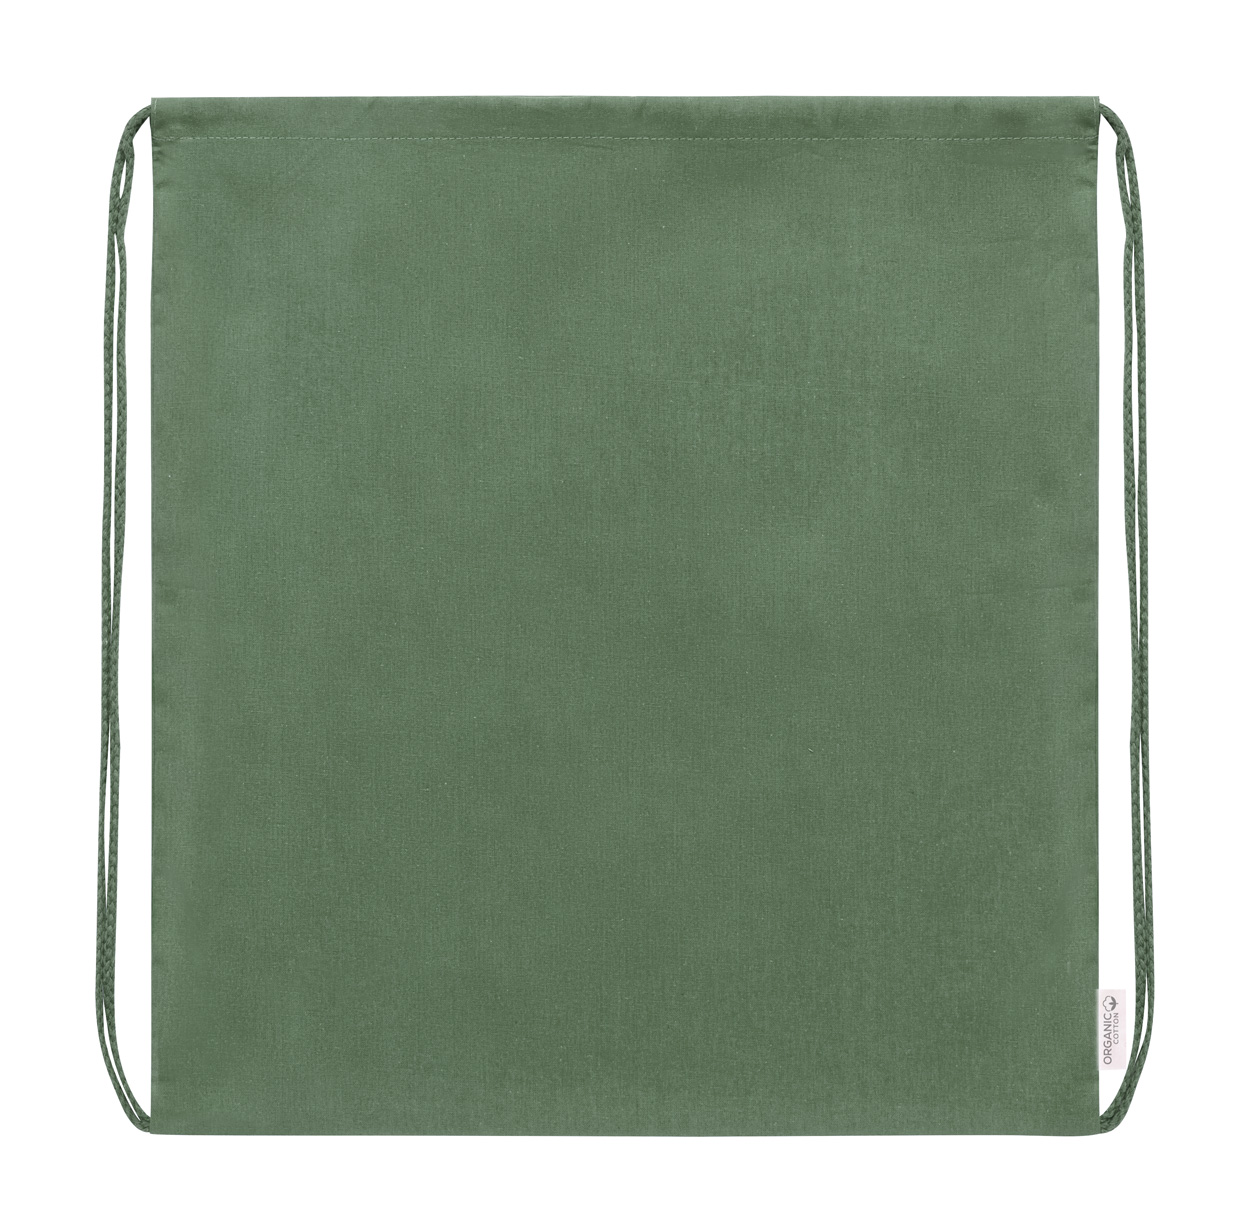 Maziu drawstring bag - green